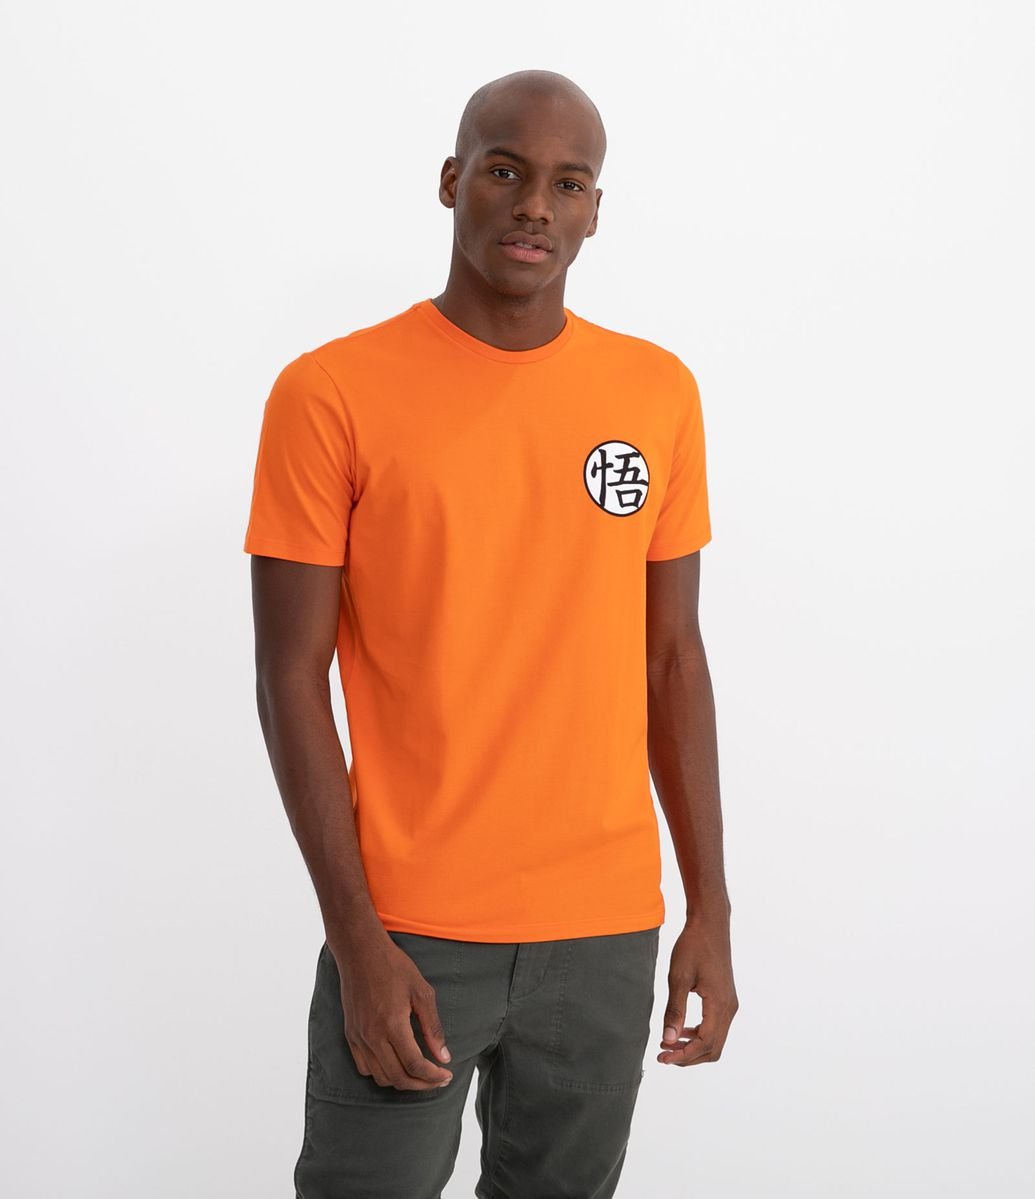 Camiseta laranja Dragon Ball, da Renner